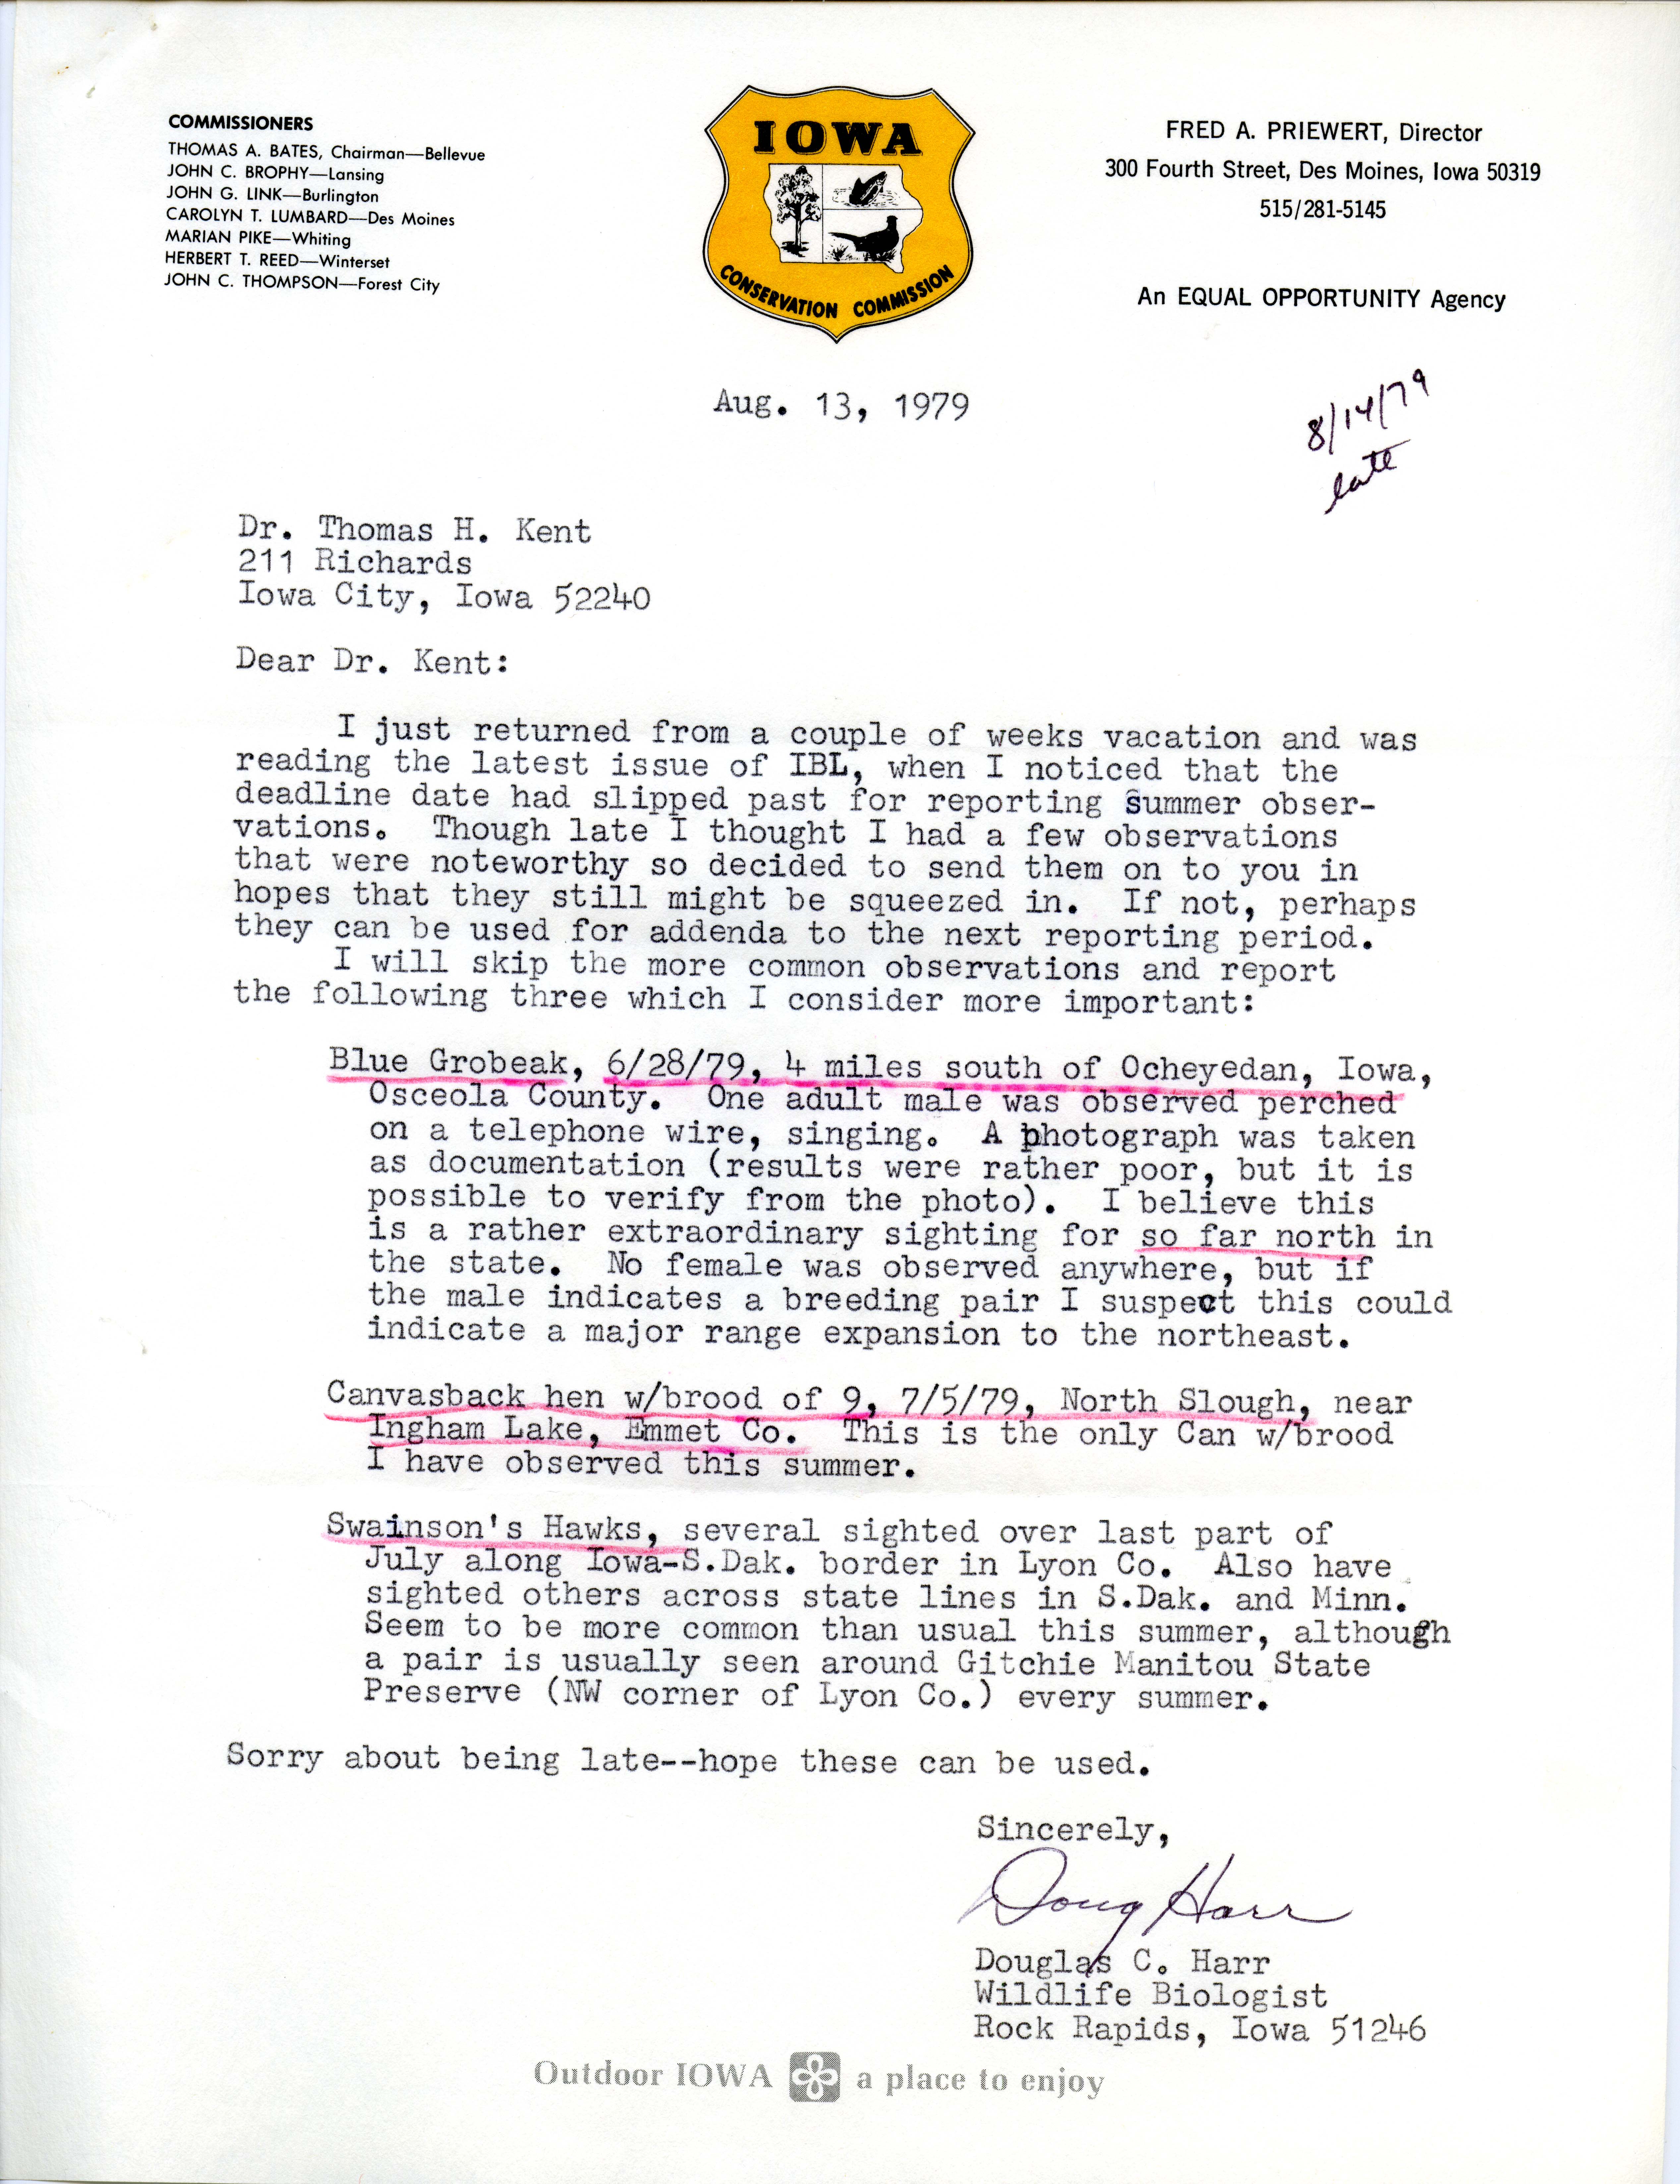 Douglas C. Harr letter to Thomas H. Kent regarding bird sightings, August 13, 1979